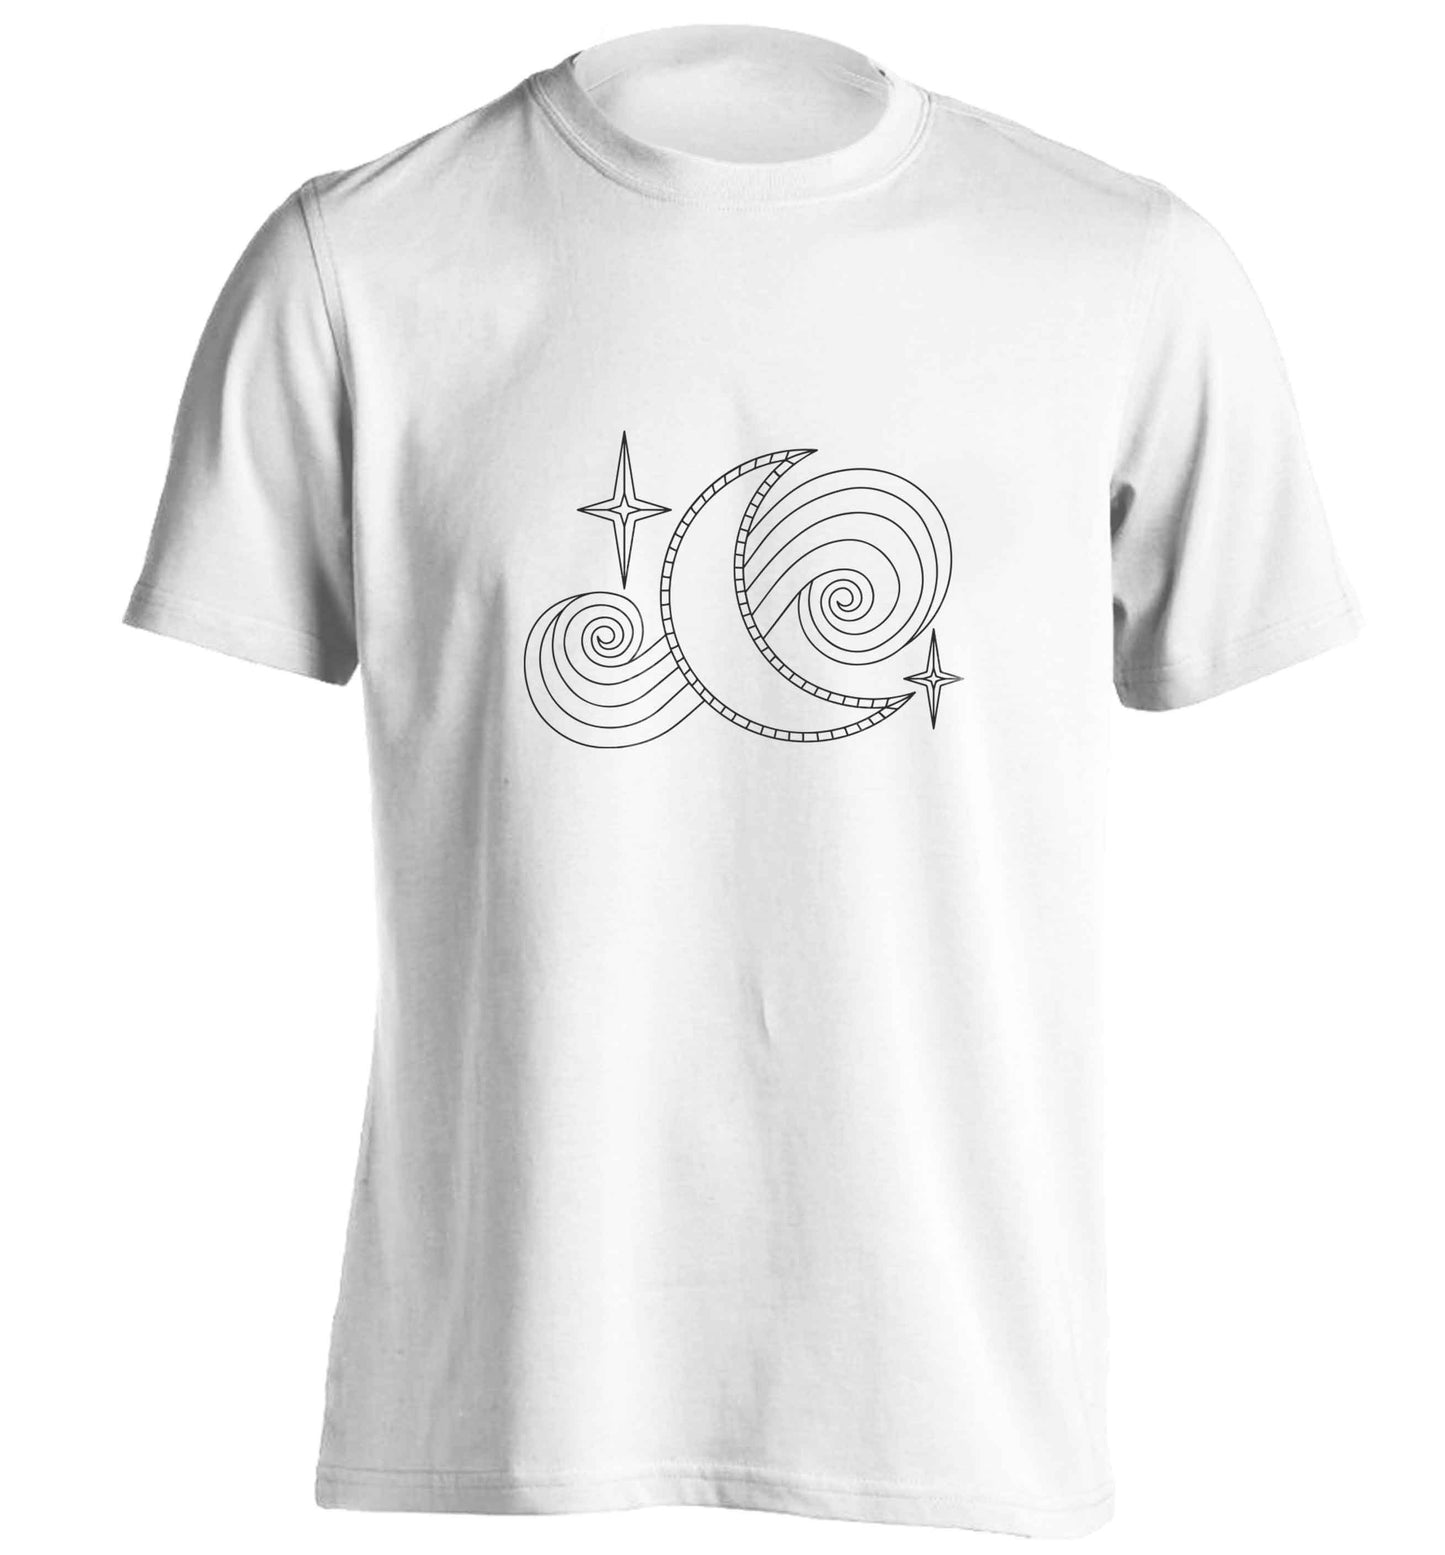 Moon and stars illustration adults unisex white Tshirt 2XL